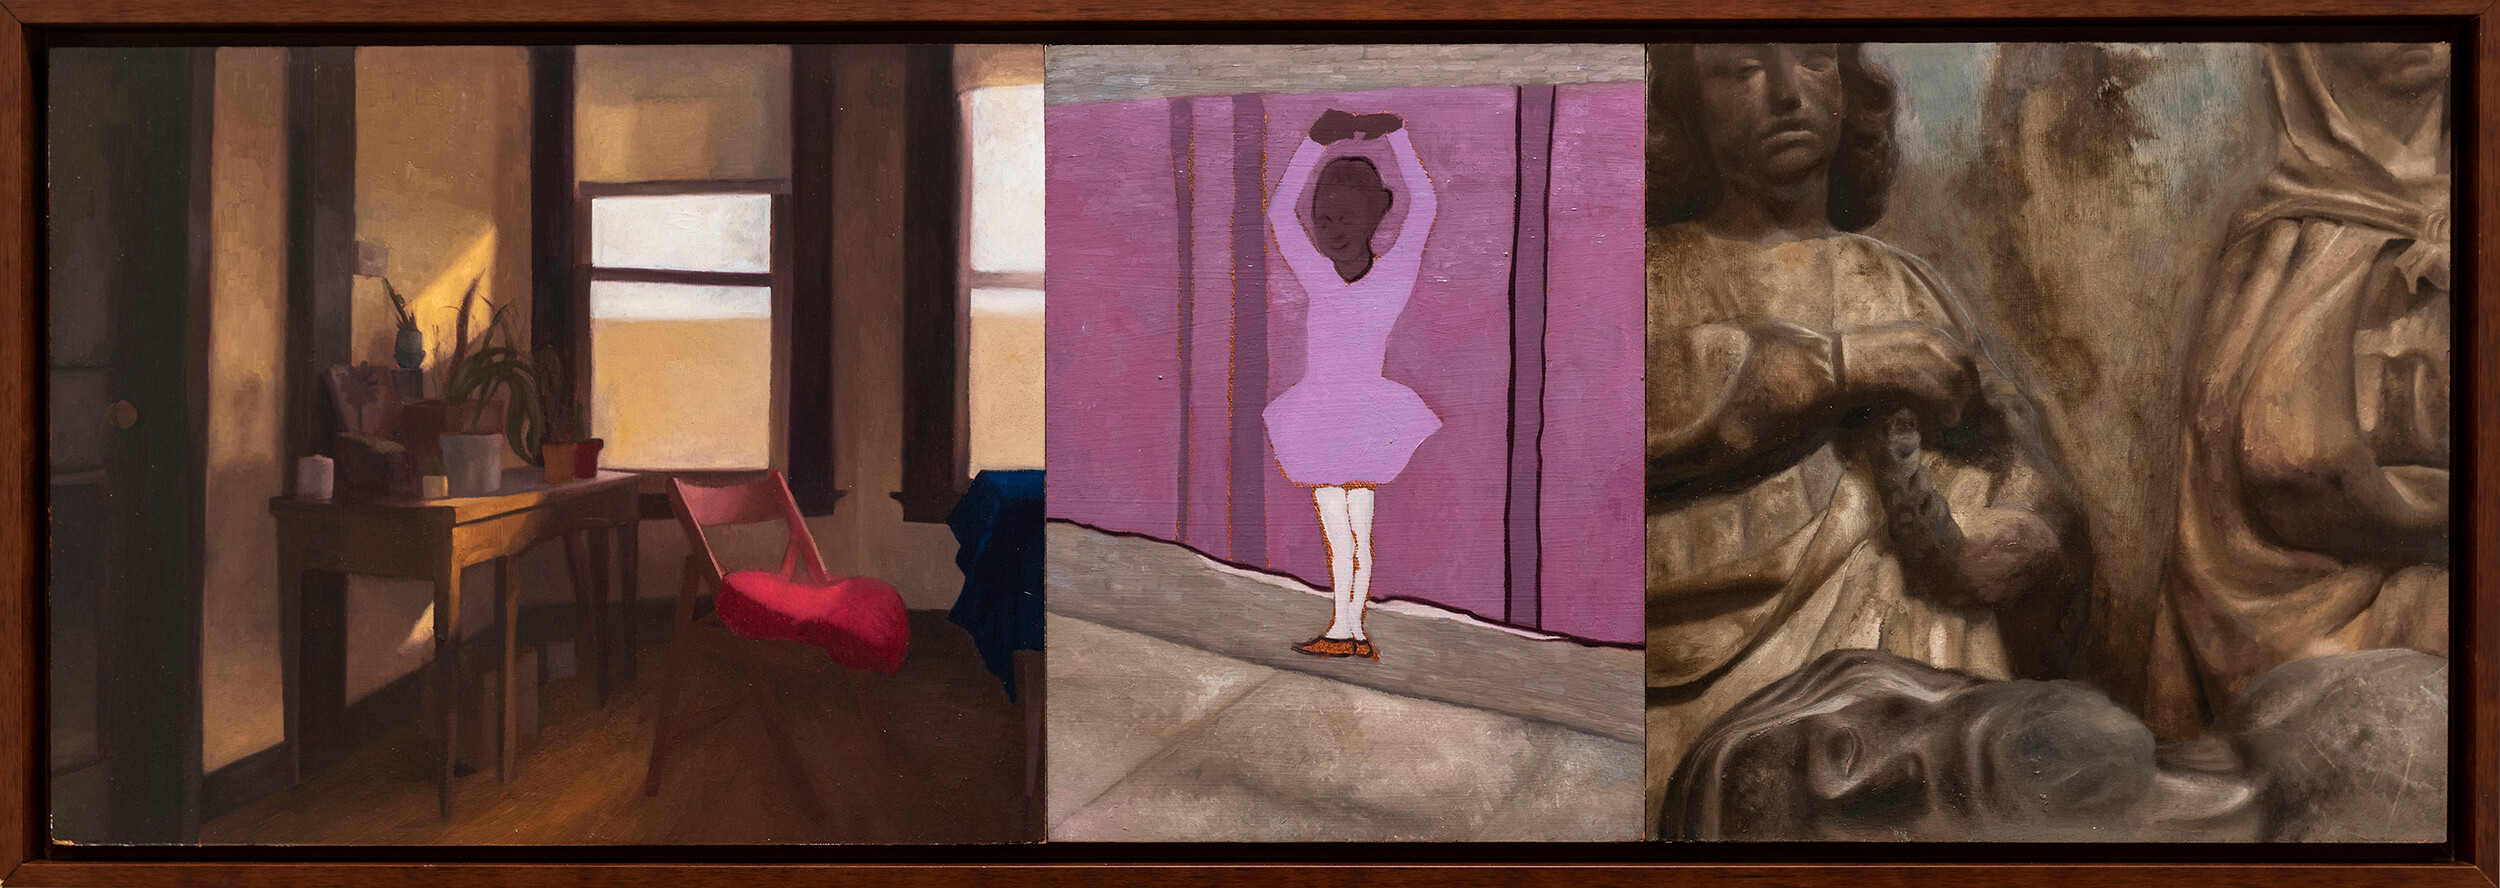 Gabriel Mills Human, 2020 oil on wood panel (triptych) 16 x 48 in. (40.6 x 121.9 cm.)